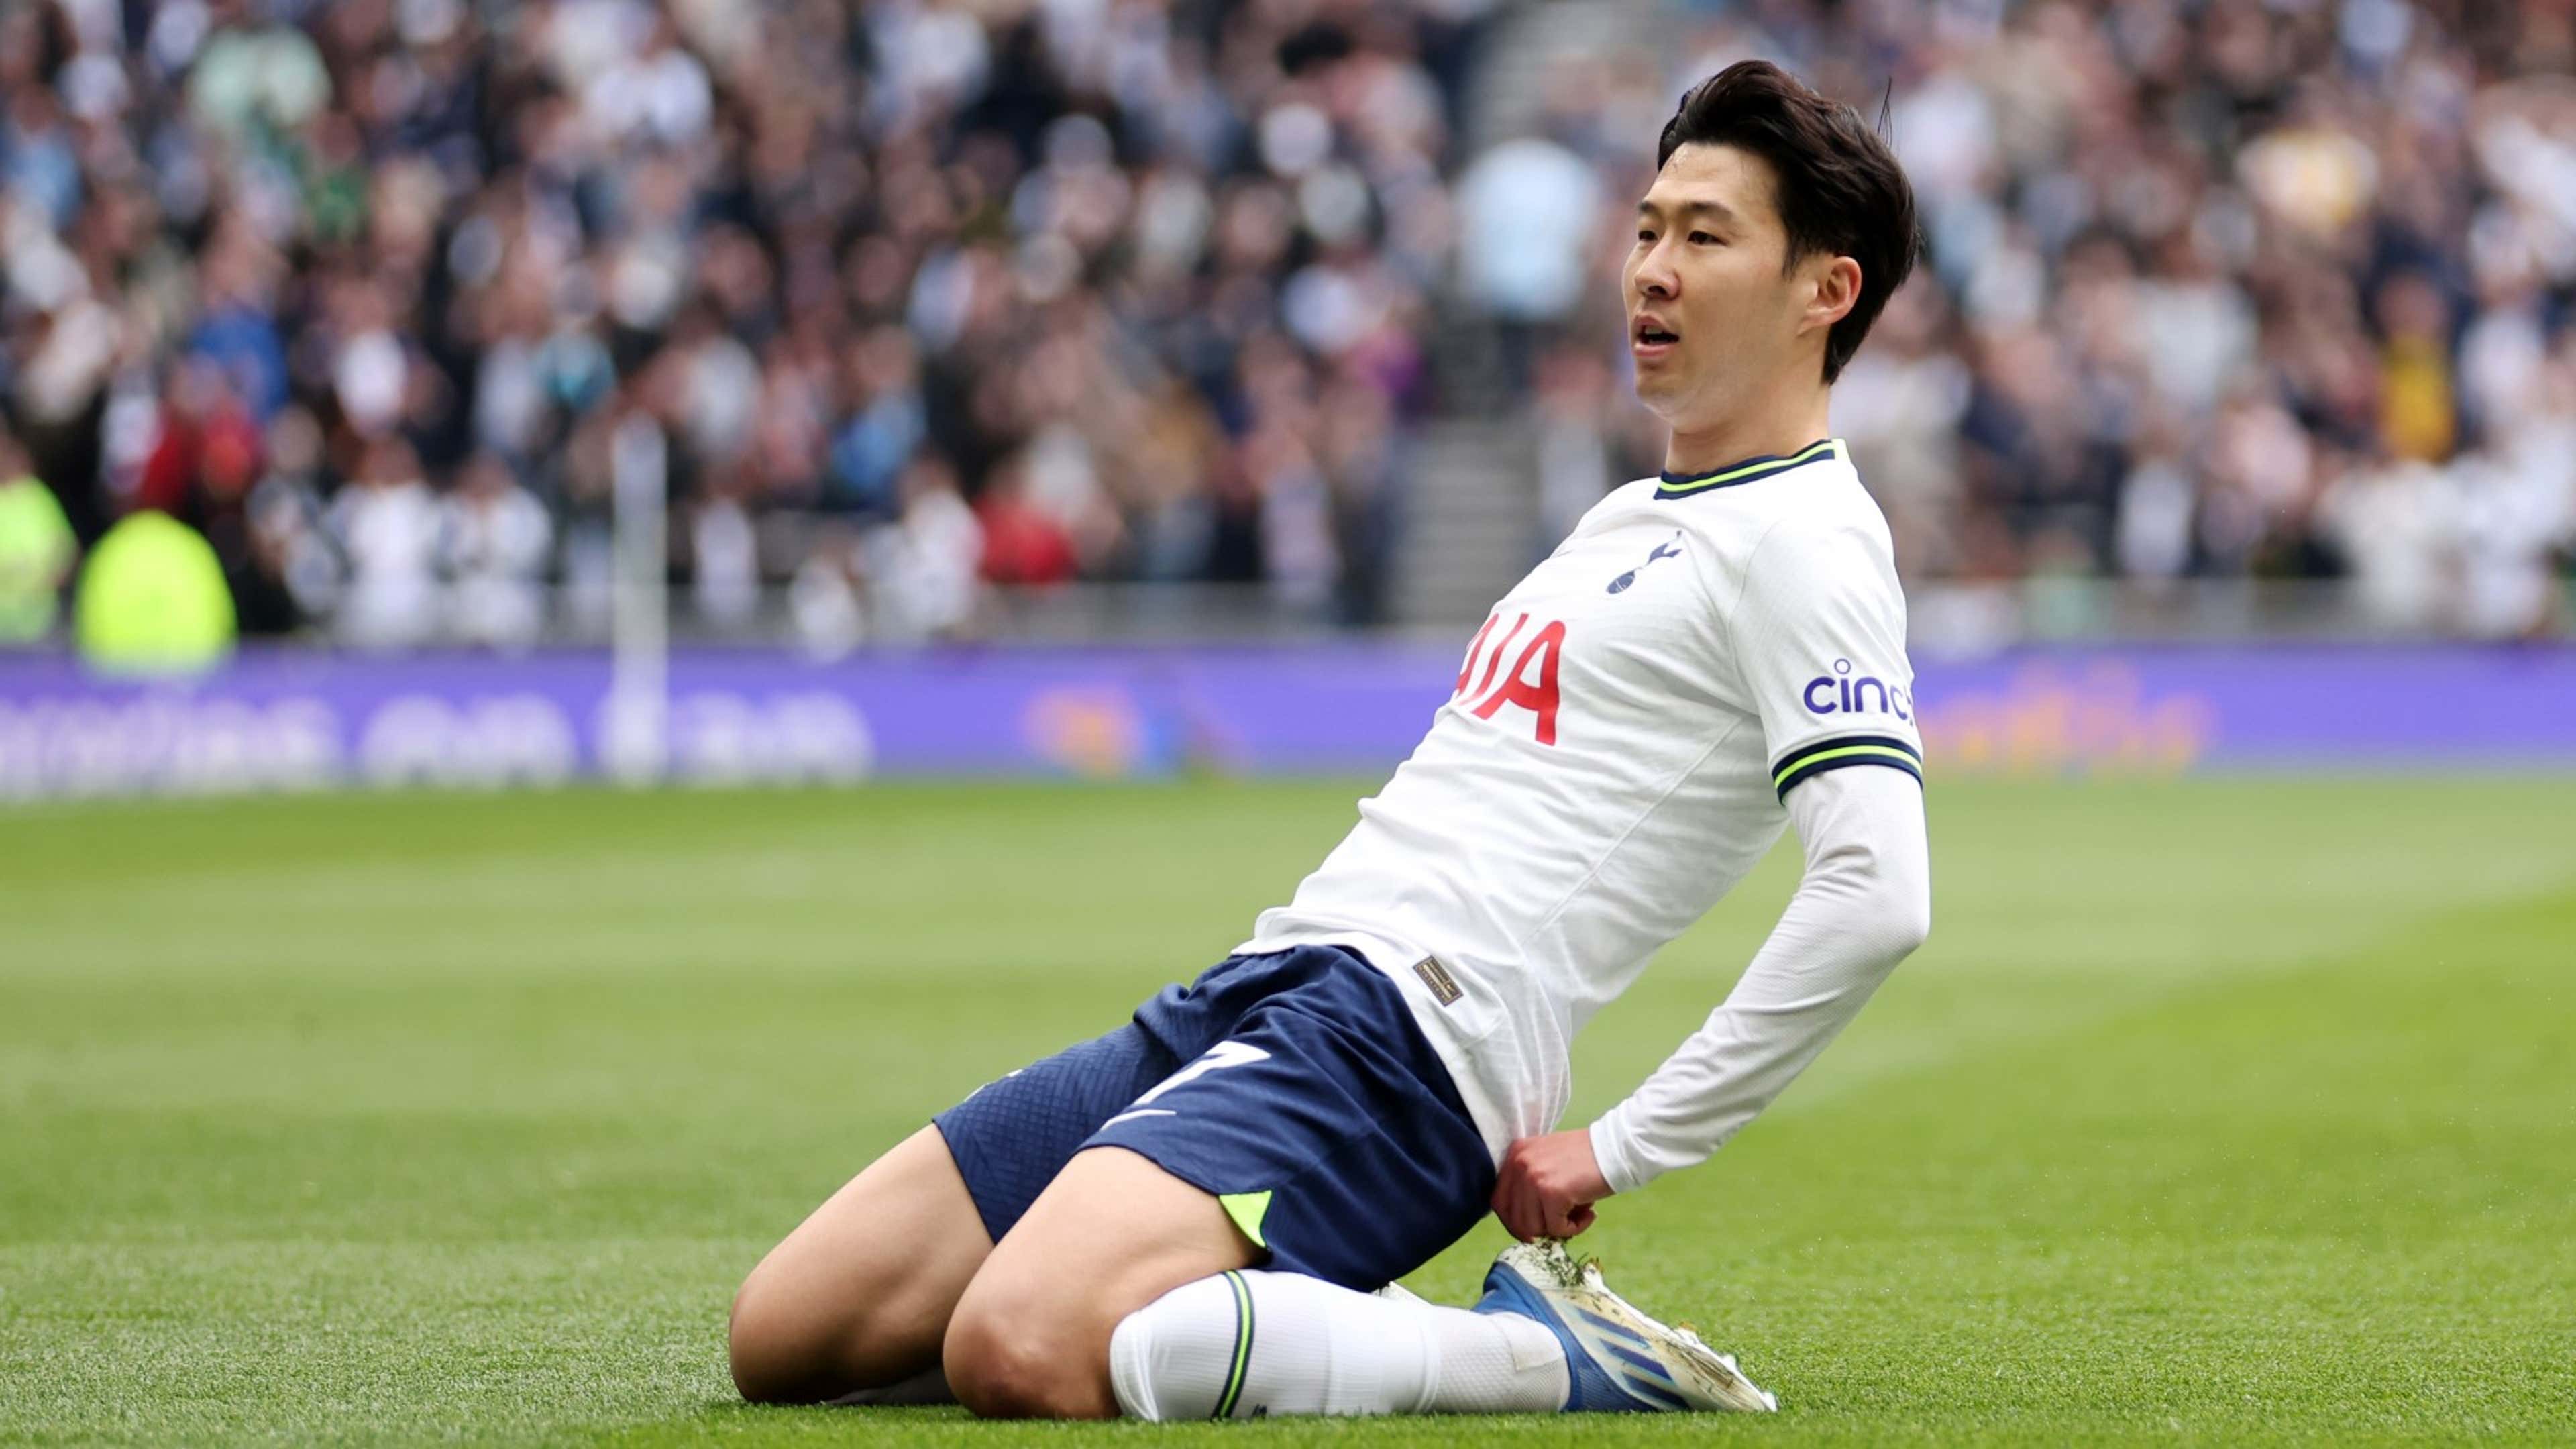 Tottenham's Son Heung-min scores Premier League career-high 20th